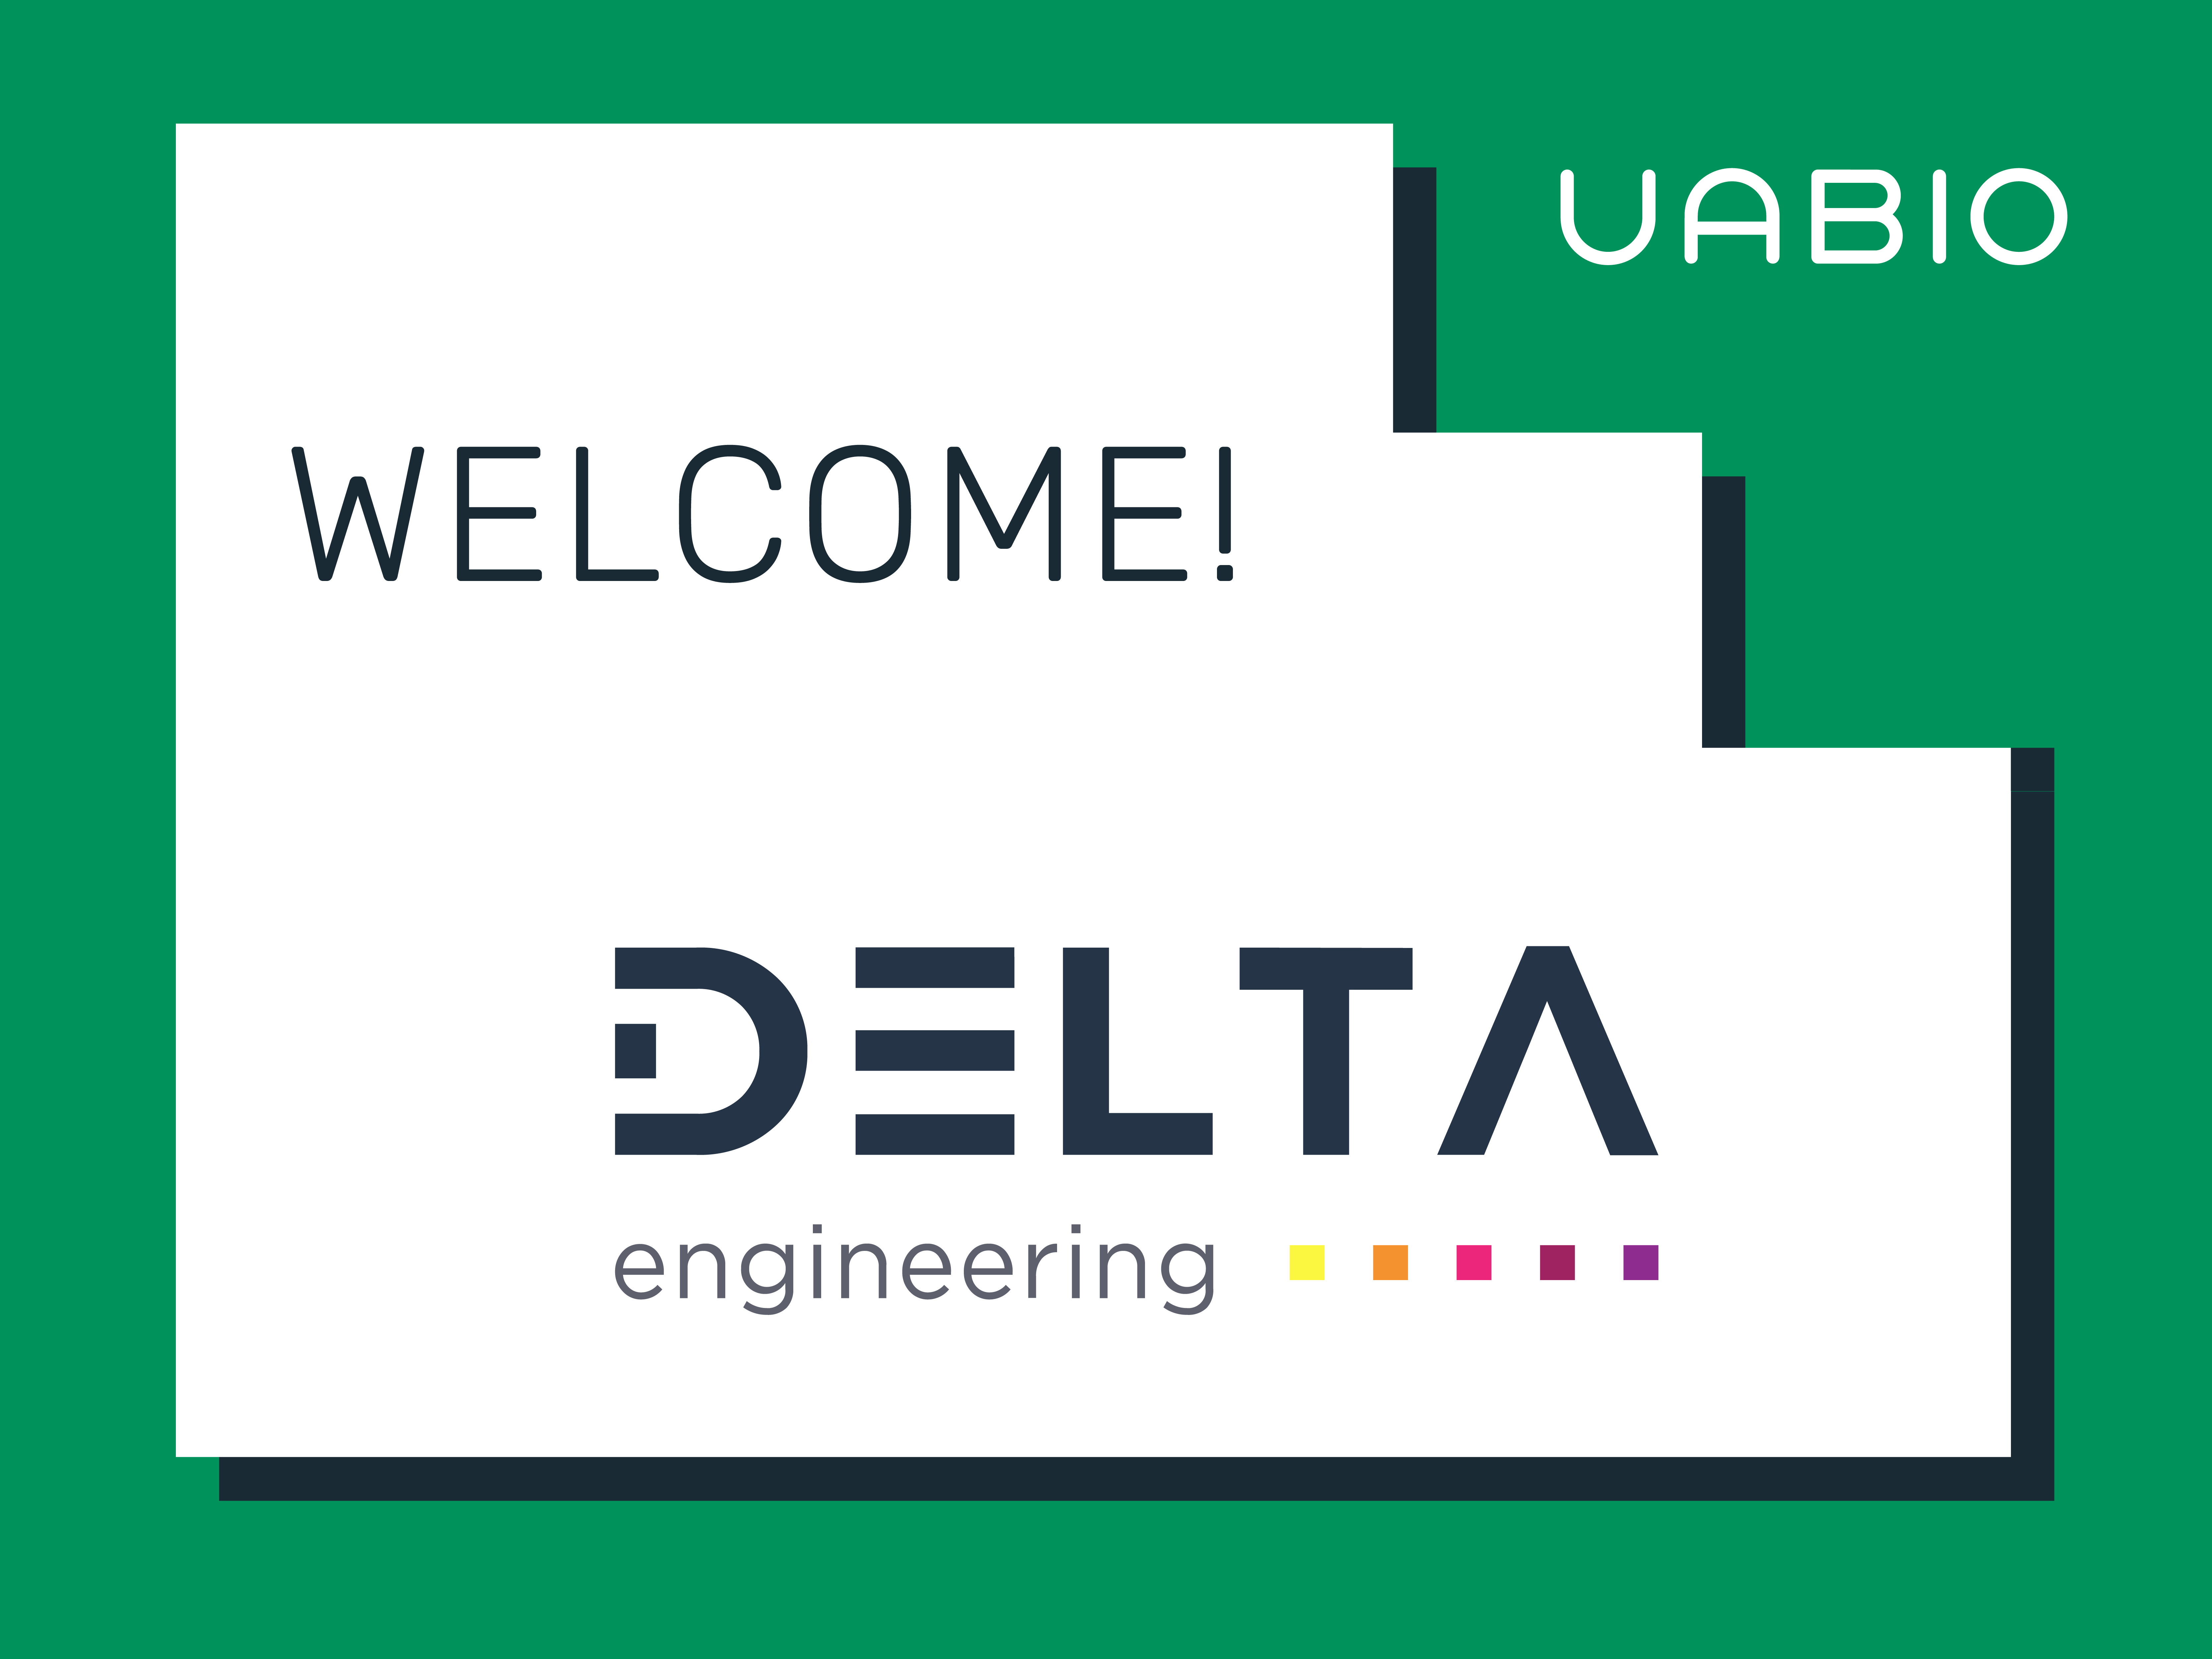 Delta Engineering UABIO partner